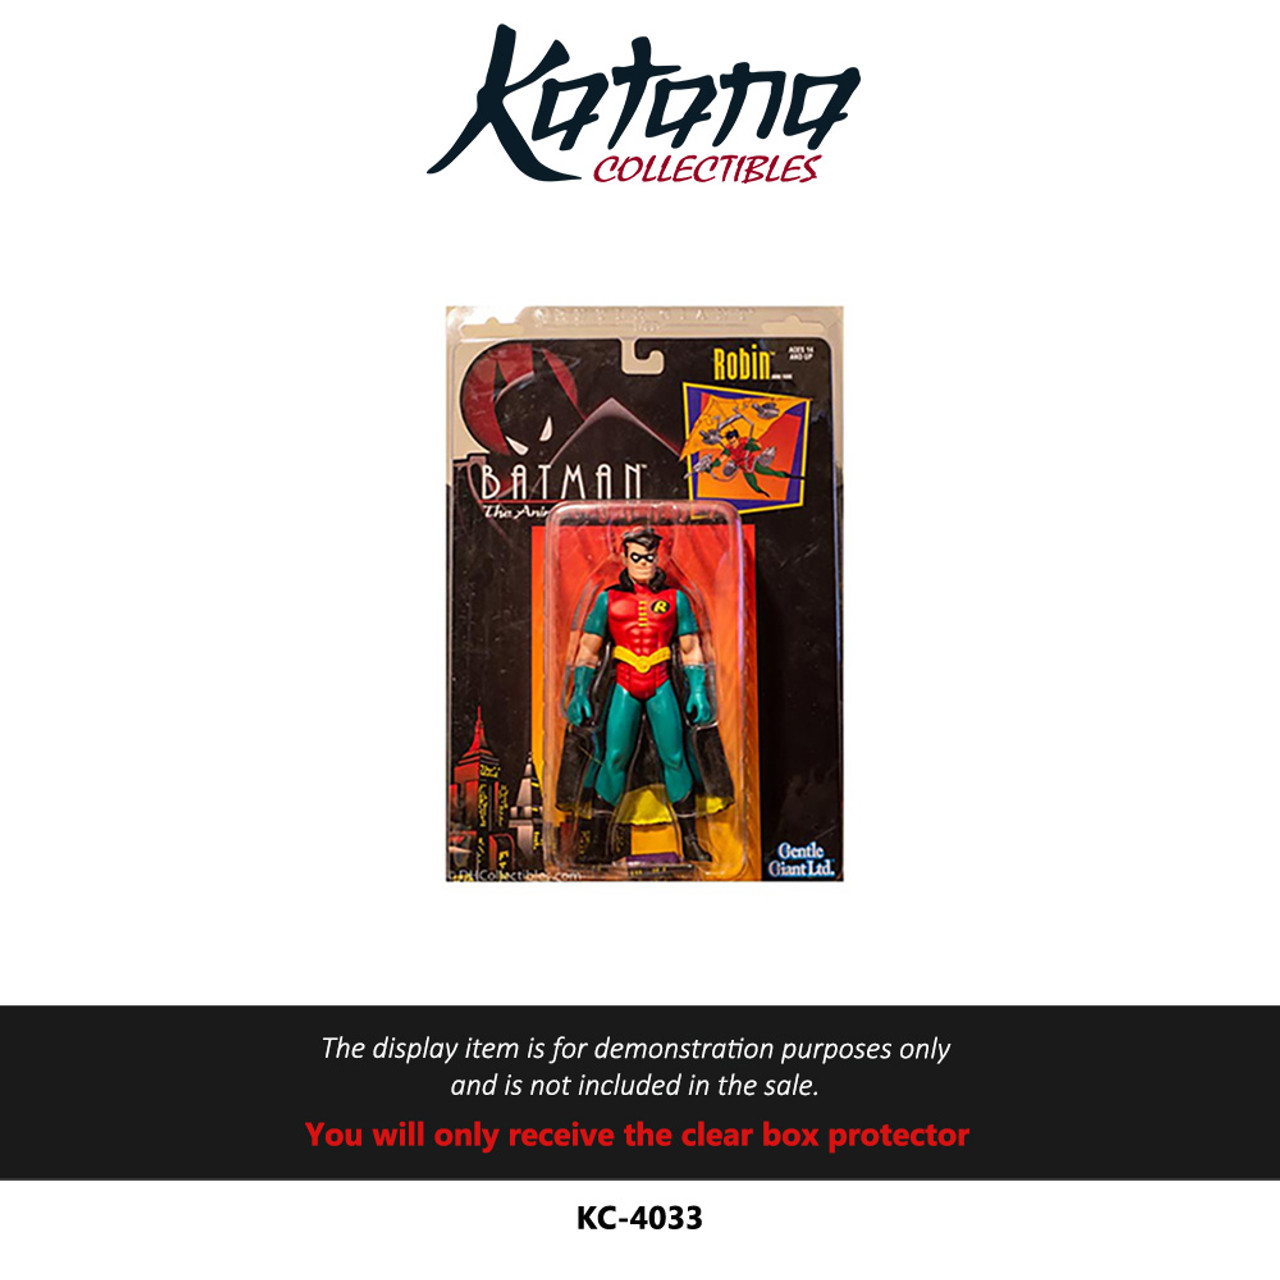 Katana Collectibles Protector For Gentle Giants Jumbo Batman The Animated Series Robin Figure